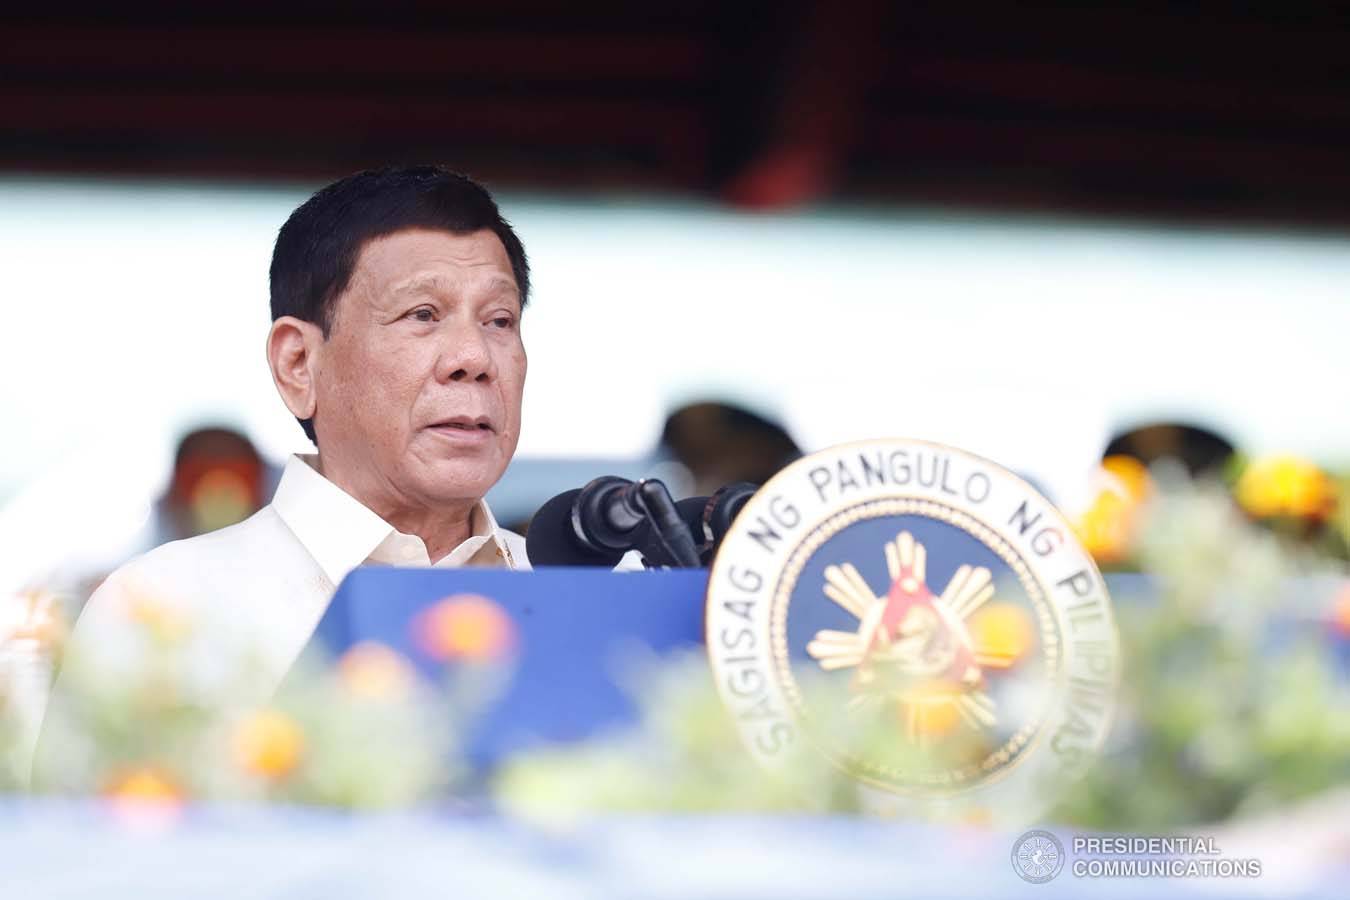 President Rodrigo Roa Duterte delivering a speech